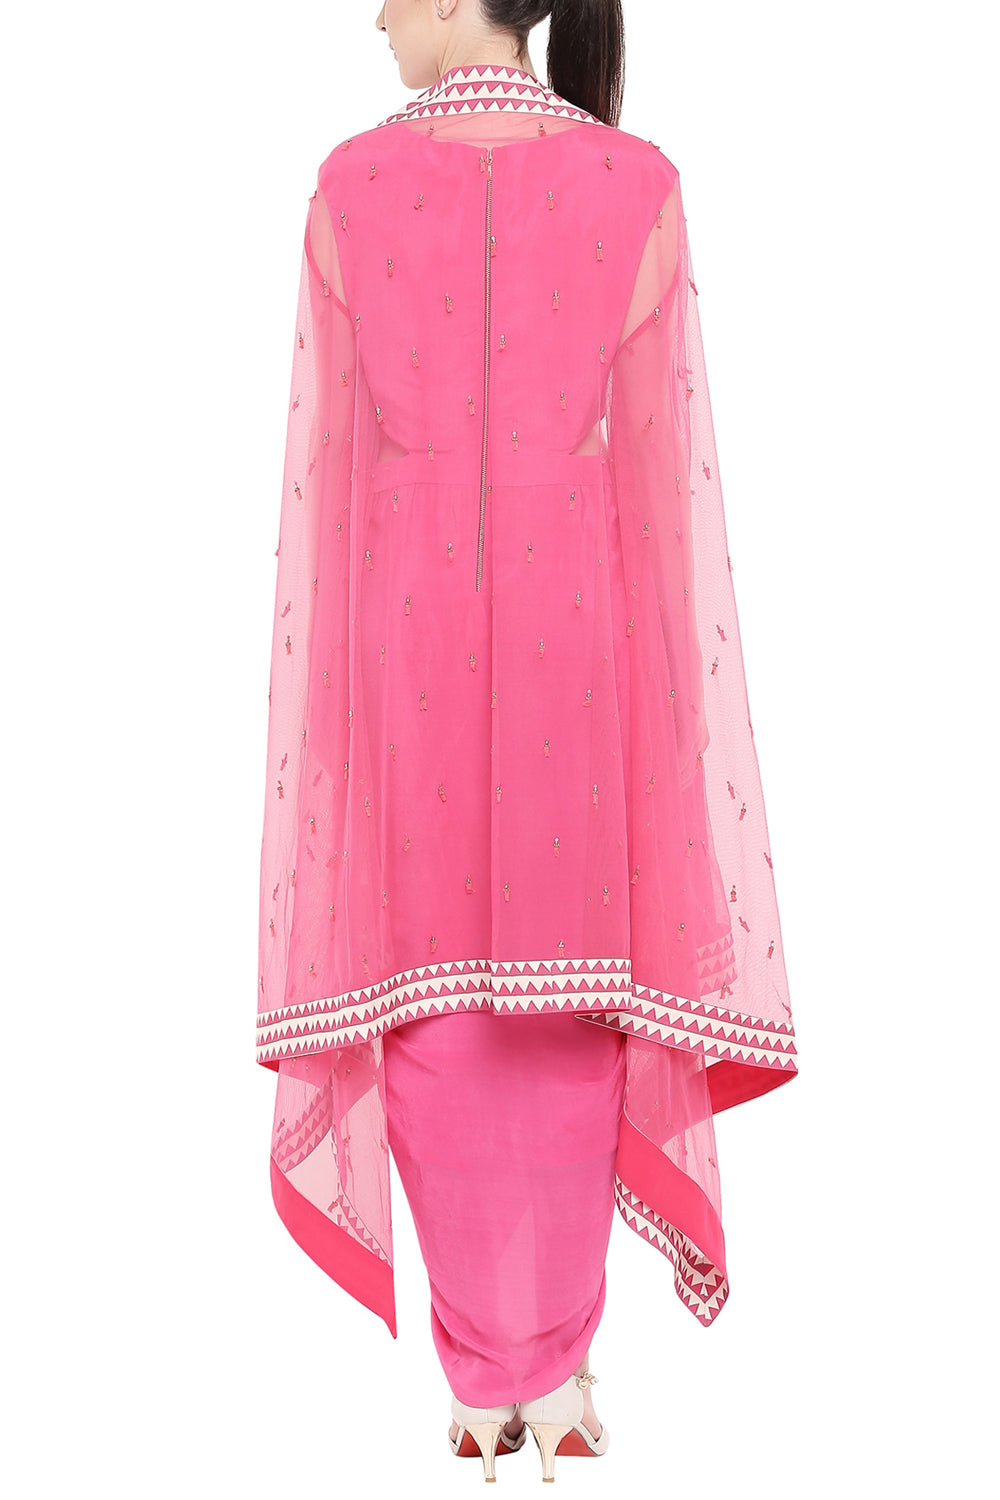 Fuchsia Pink Geometric Printed Drape Dress With Cape